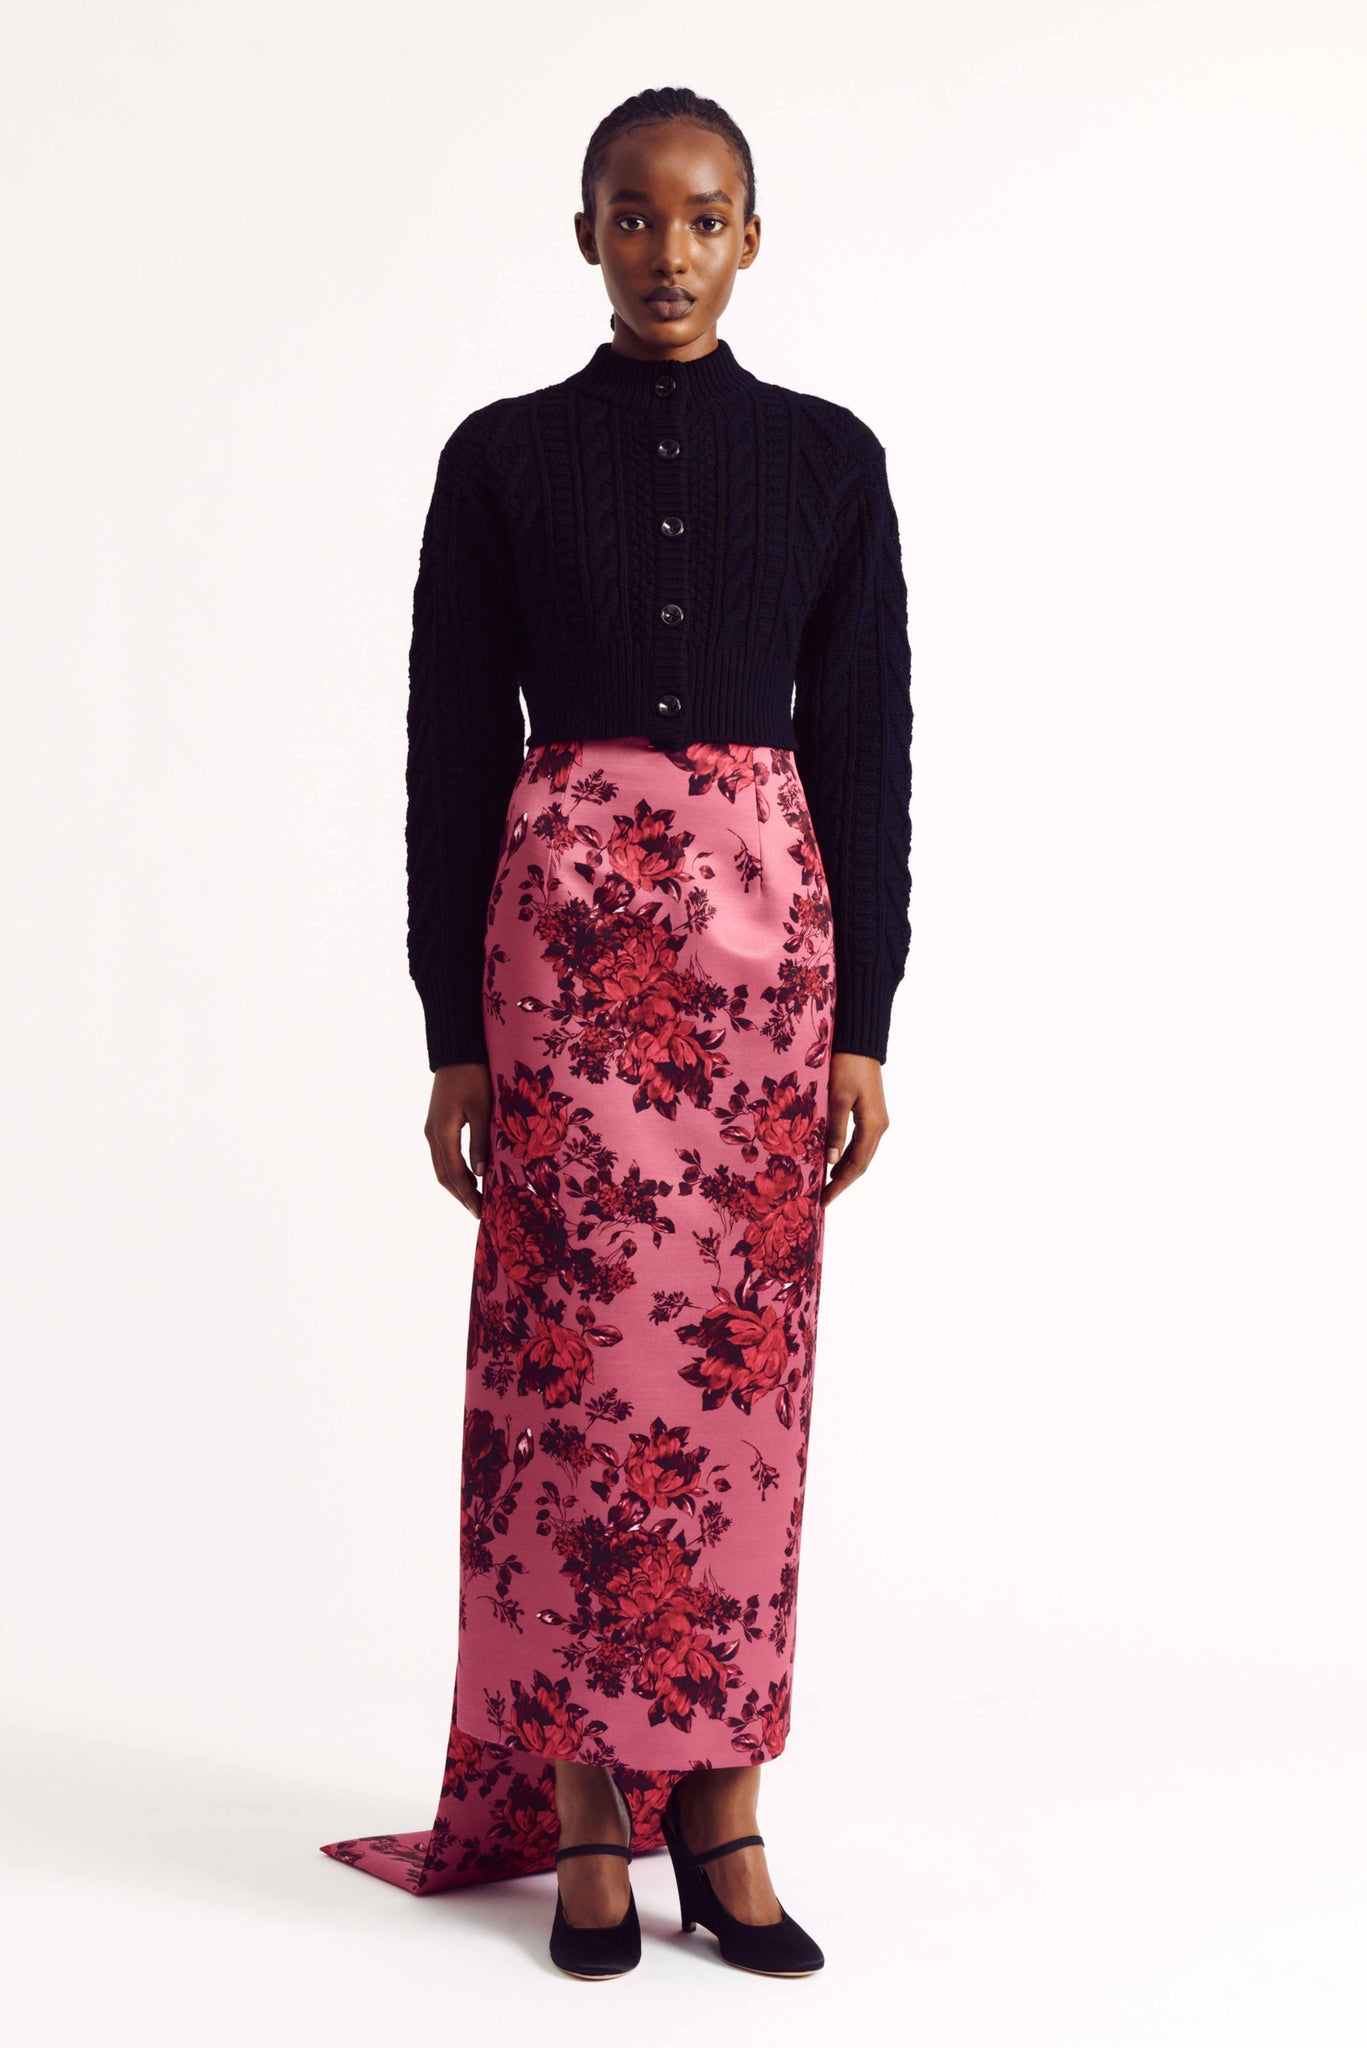 Harleigh Skirt with Detachable Train in Mauve Pink Festive Bouquet Taffeta Faille | Emilia Wickstead